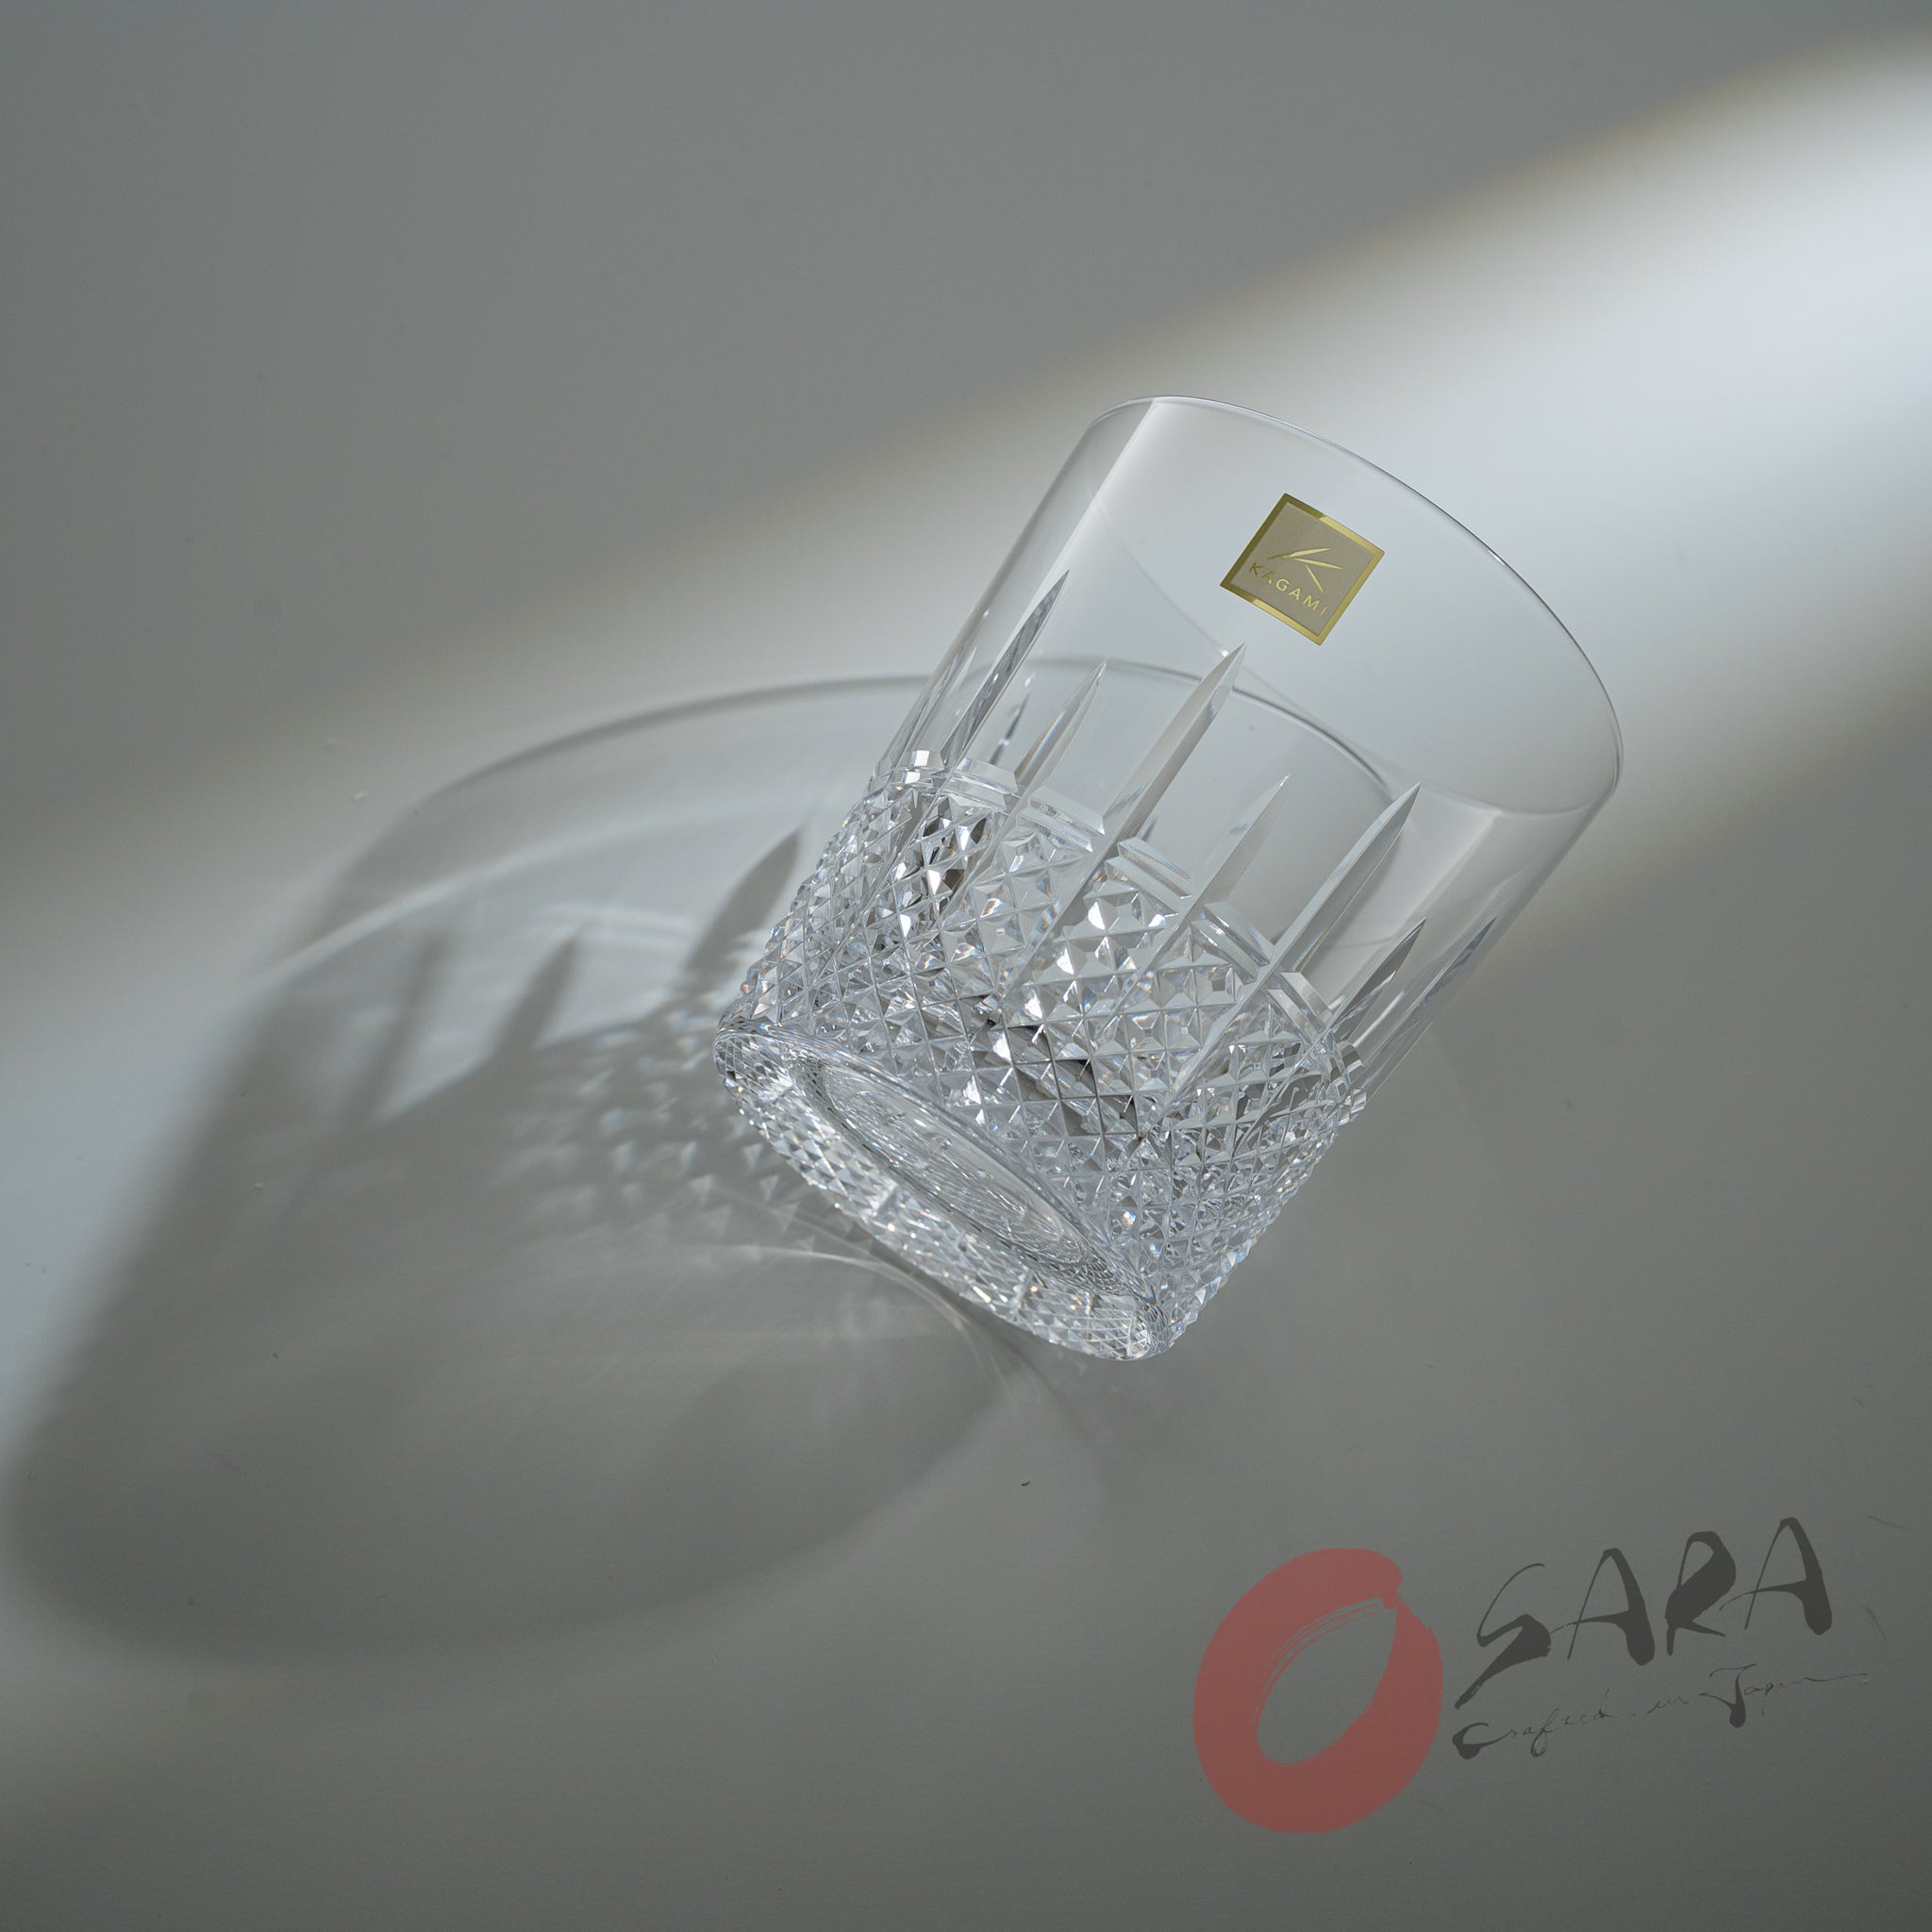 KAGAMI Crystal Japanese Handmade Whiskey Glass - 250 ml - Icicle